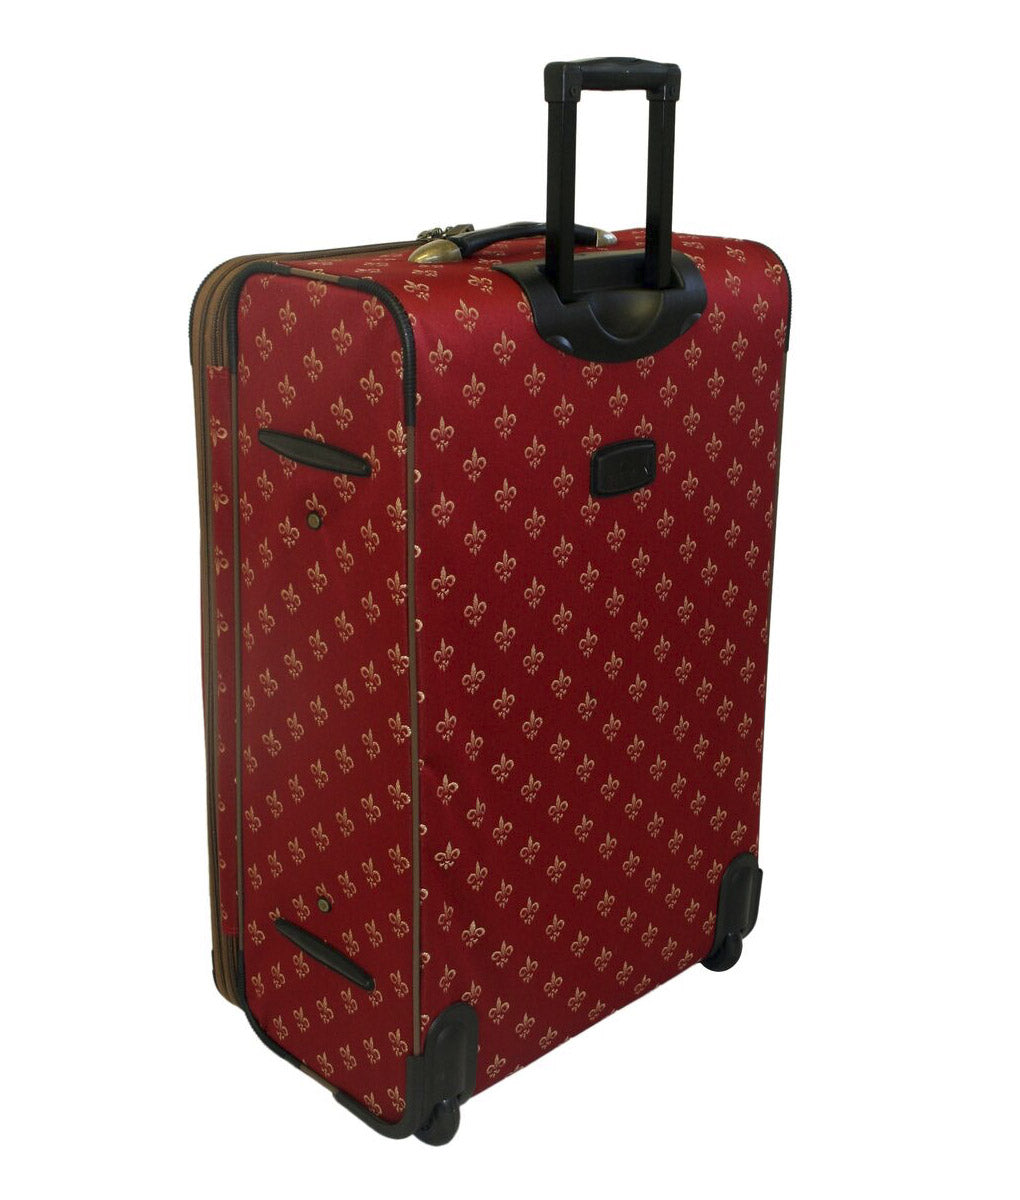 American Flyer Fleur De Lis 4-Piece Luggage Set 54500-4 RED - The